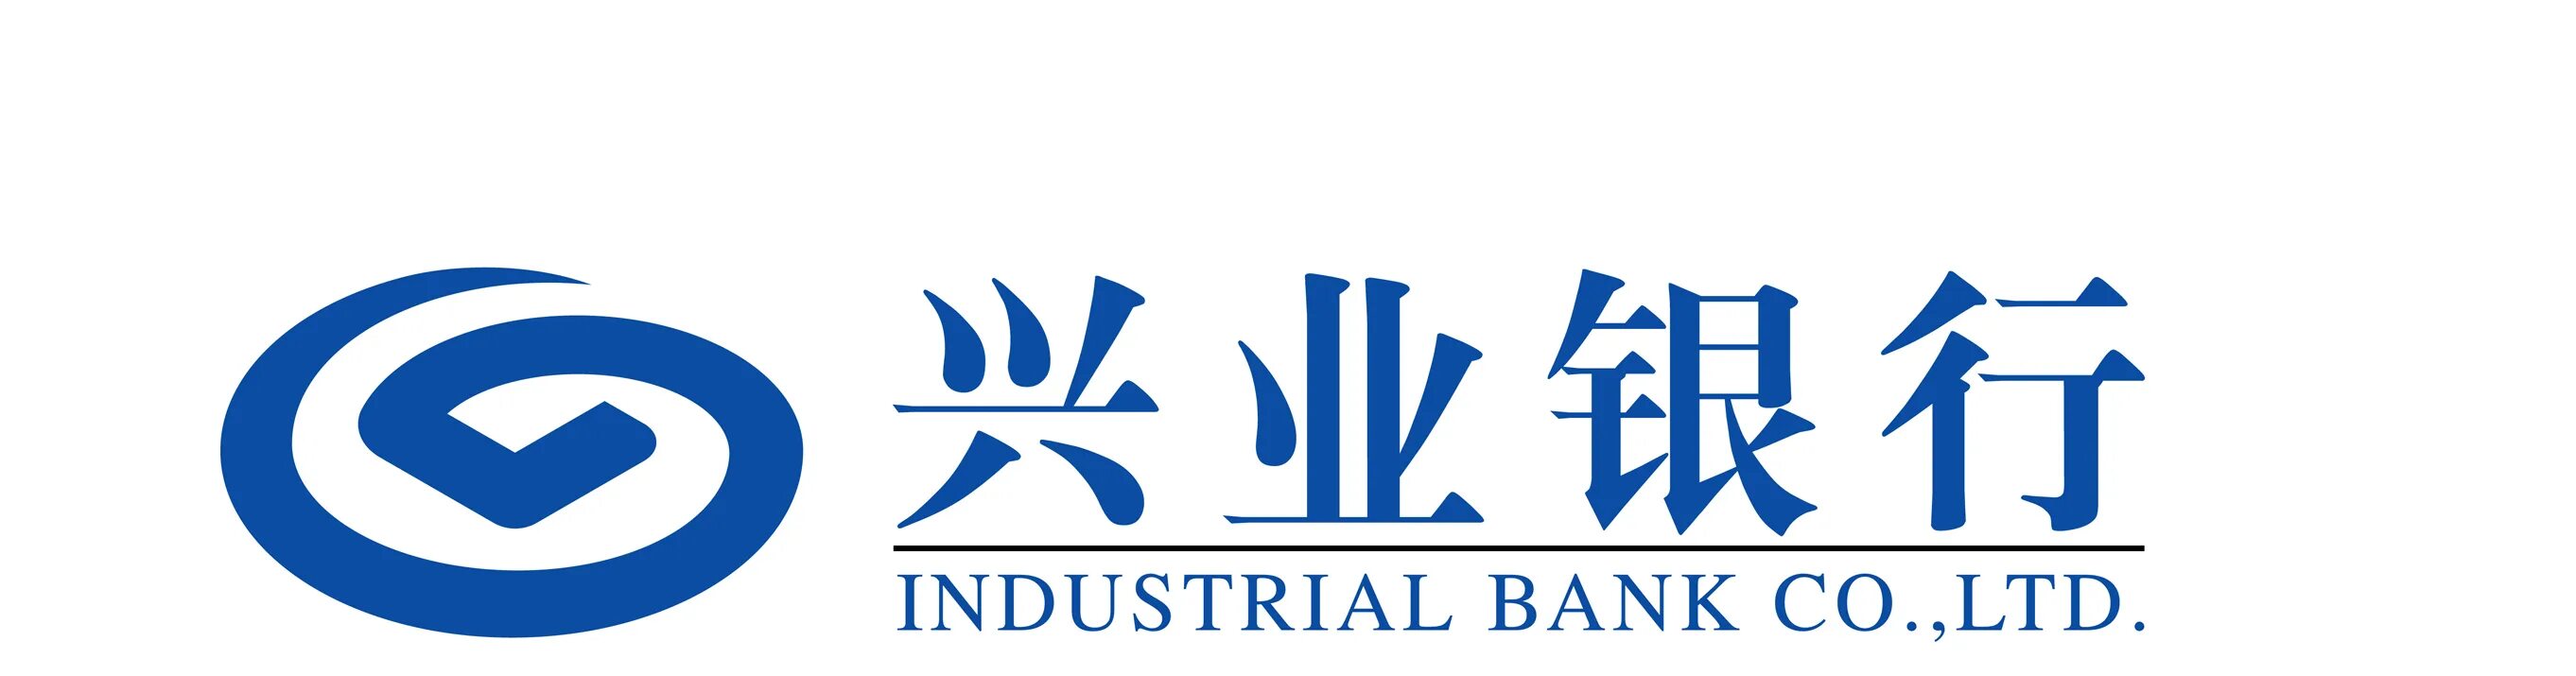 Bank of China logo. Экспортно-импортный банк Китая (the Export-Import Bank of China). Industrial Bank of Korea. Urals Financial and Industrial Bank логотип. Export import bank